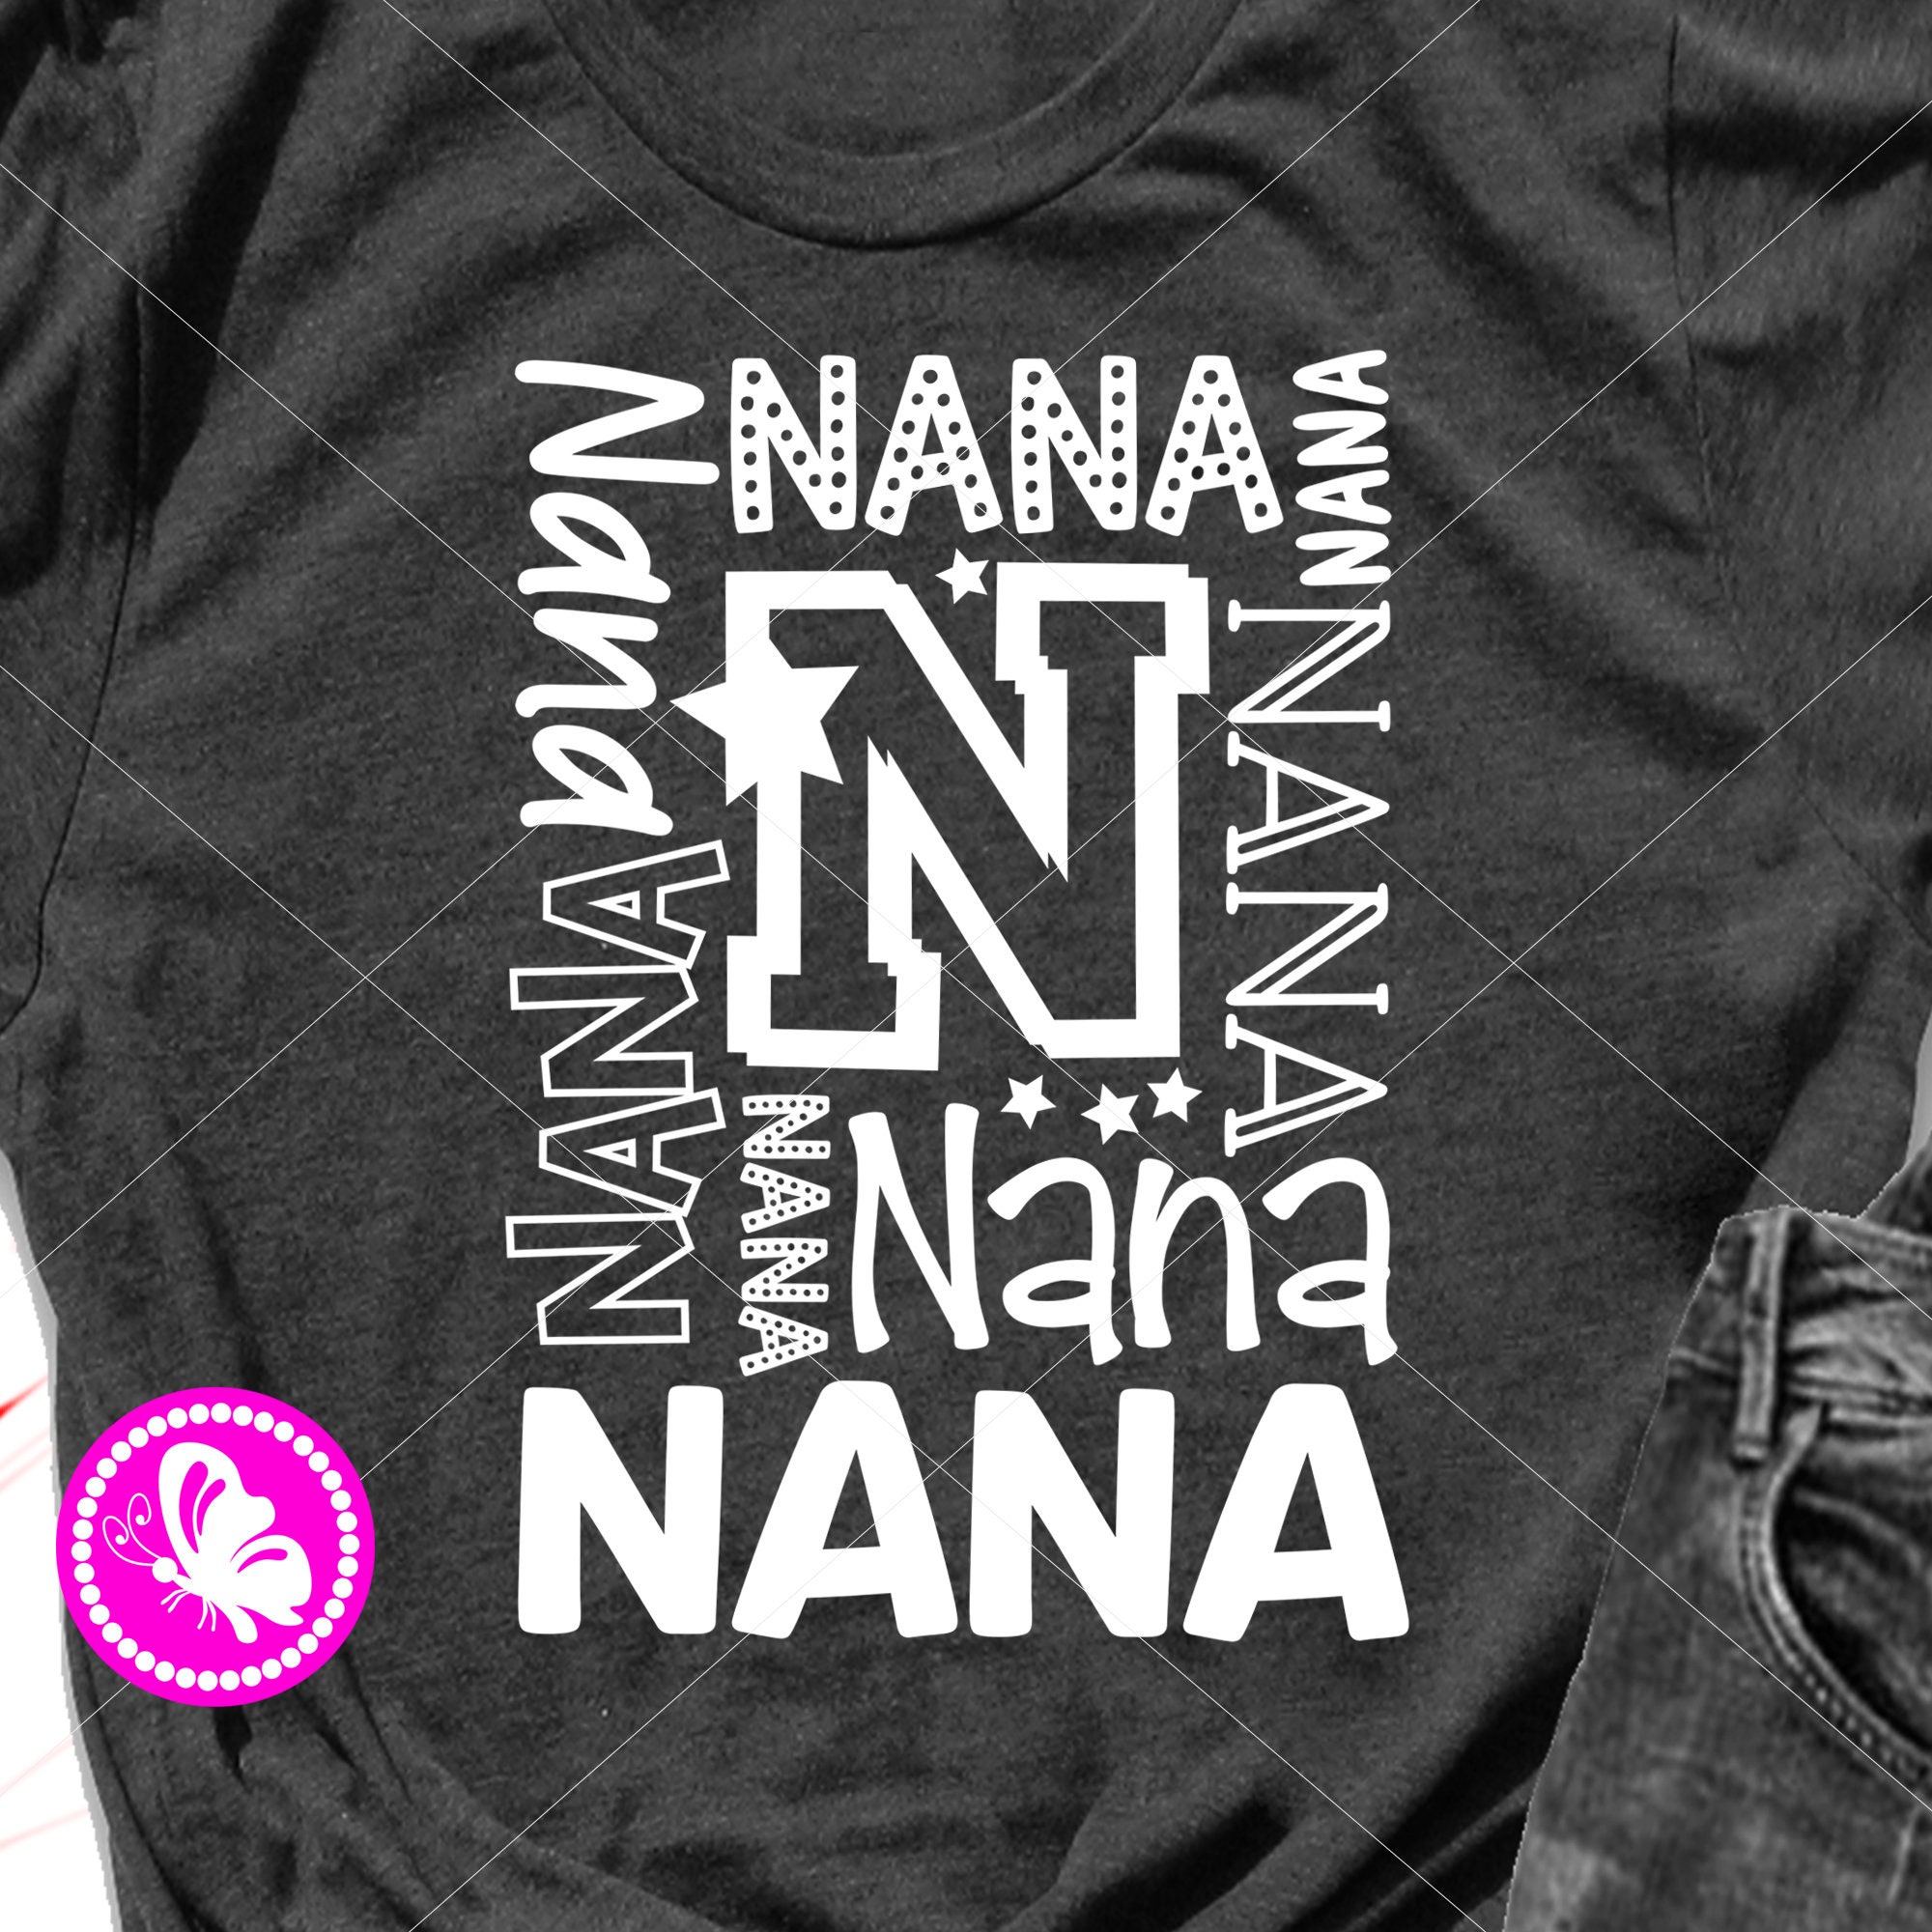 Download Nana Svg file Nana shirt svg files for cricut Family png | Etsy